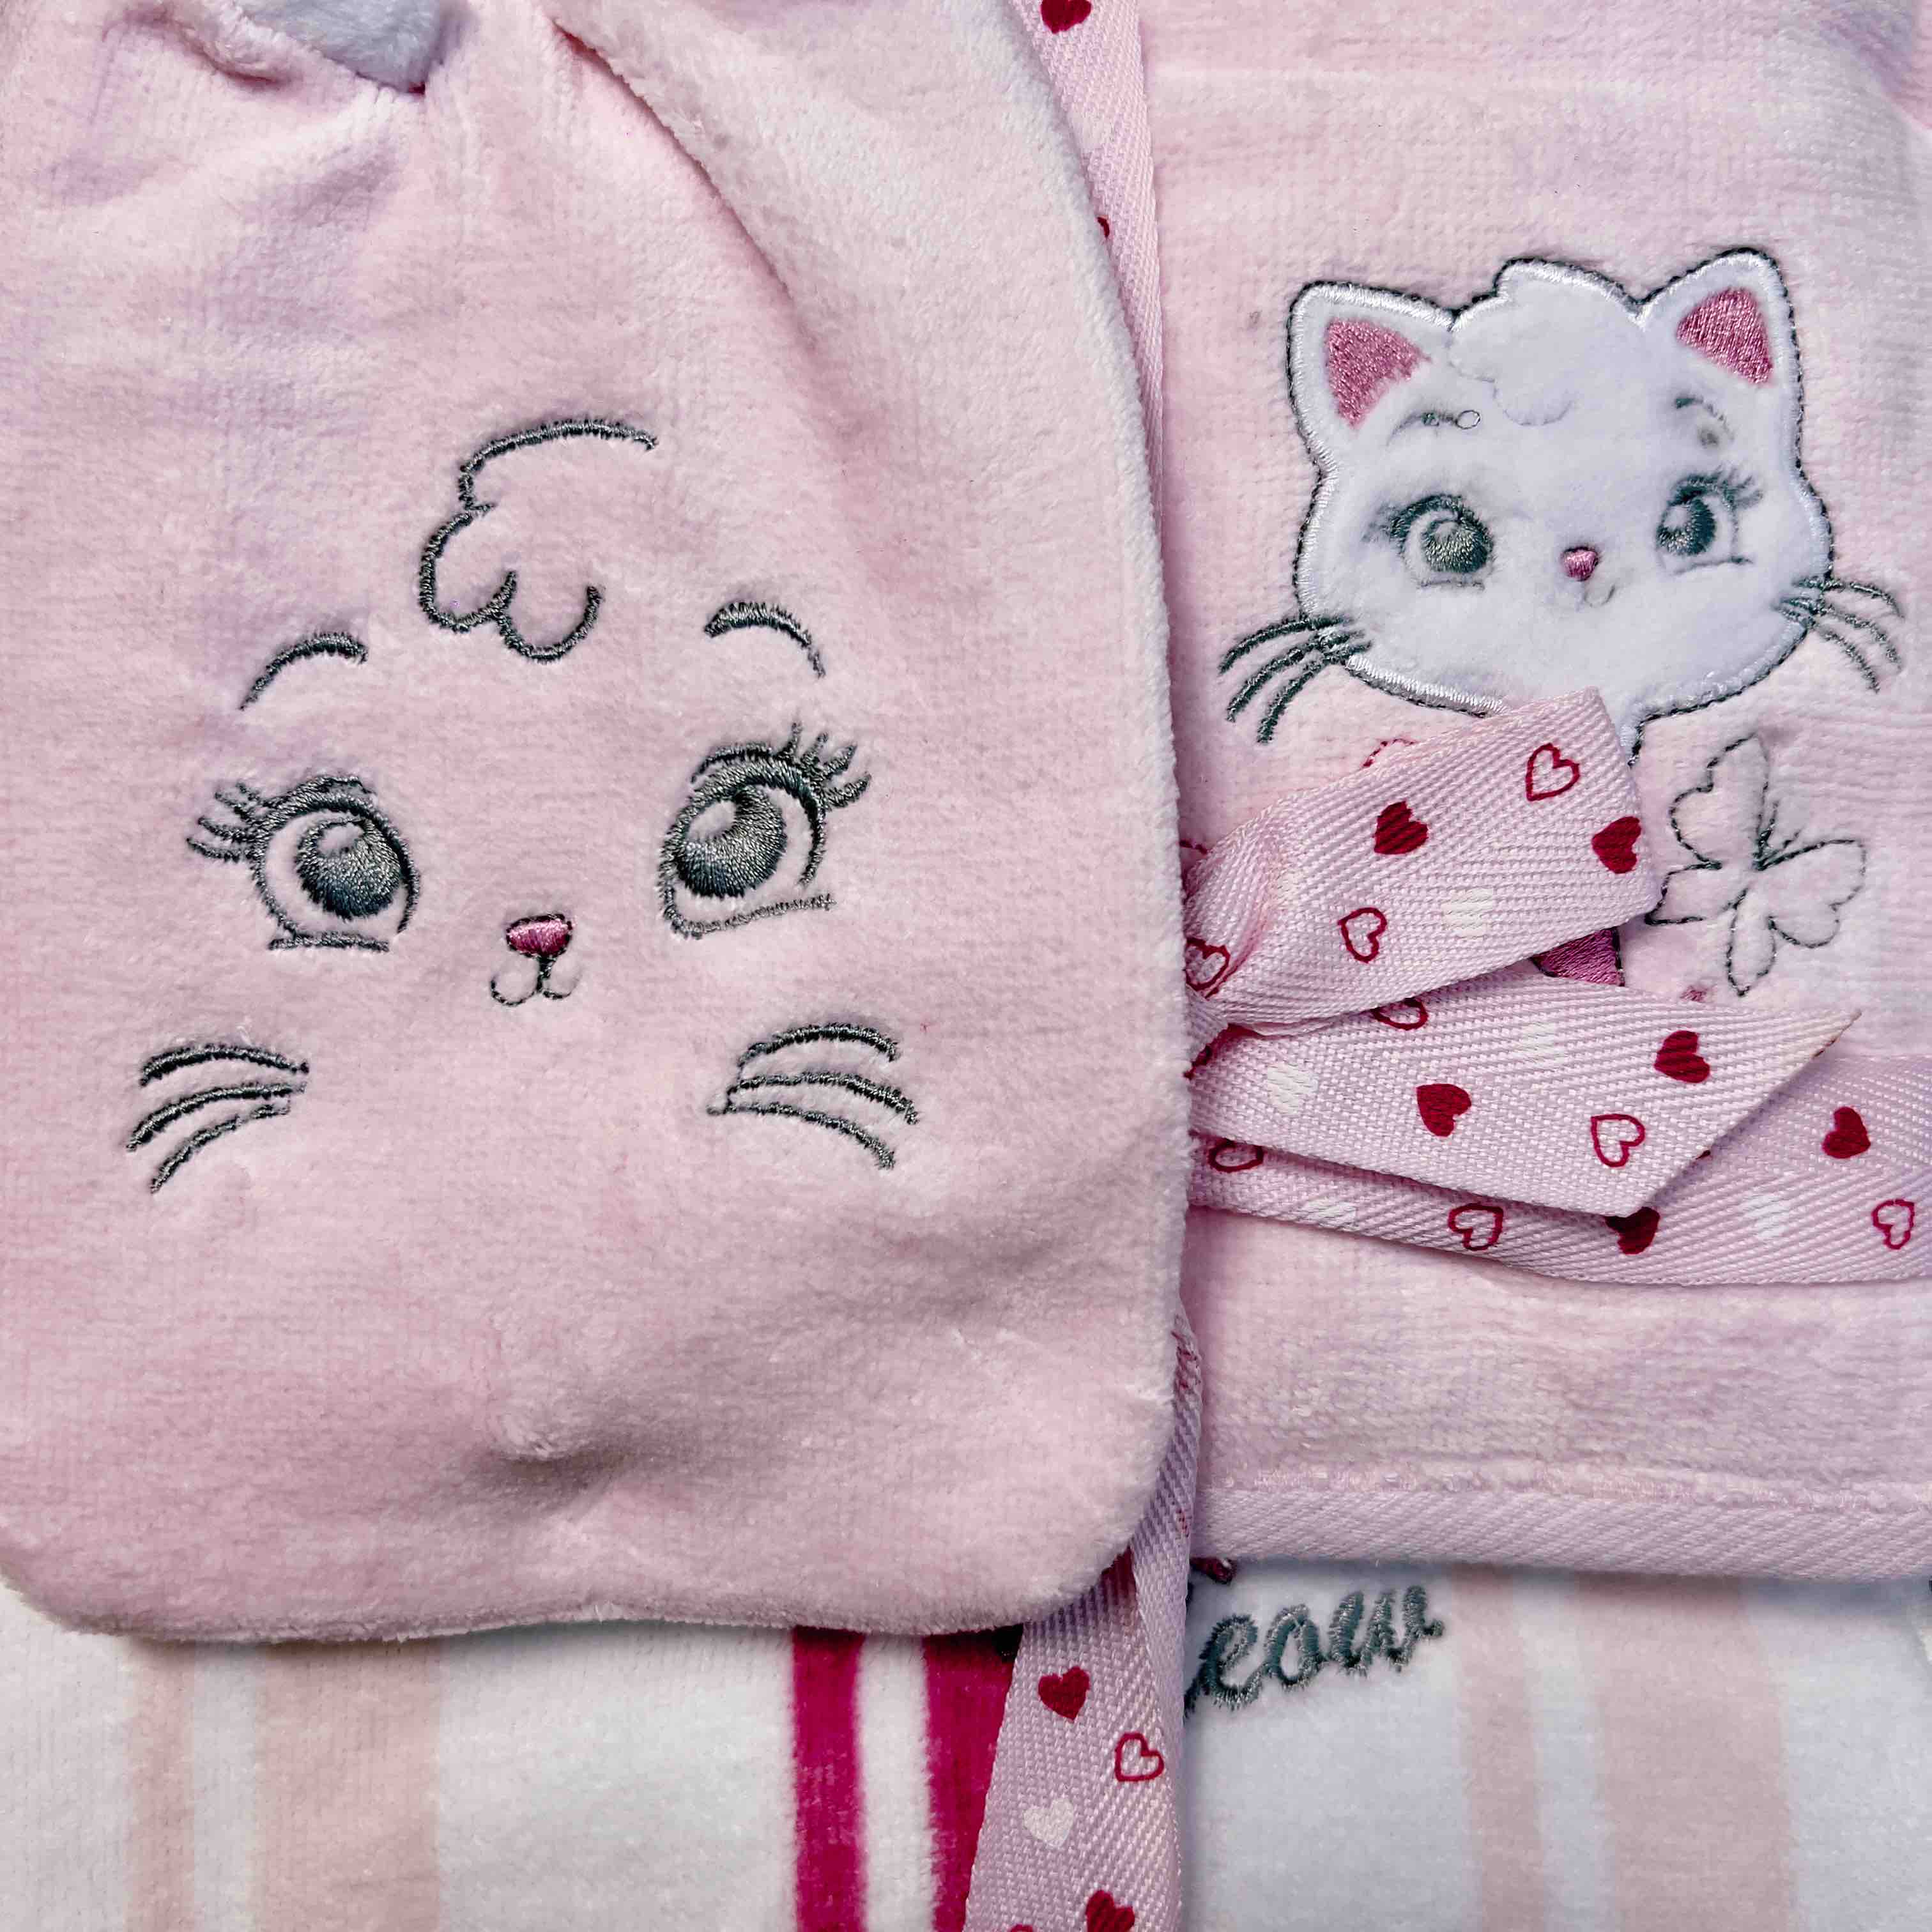 Baby Wash Mitt & Towel Set - Pink Cats